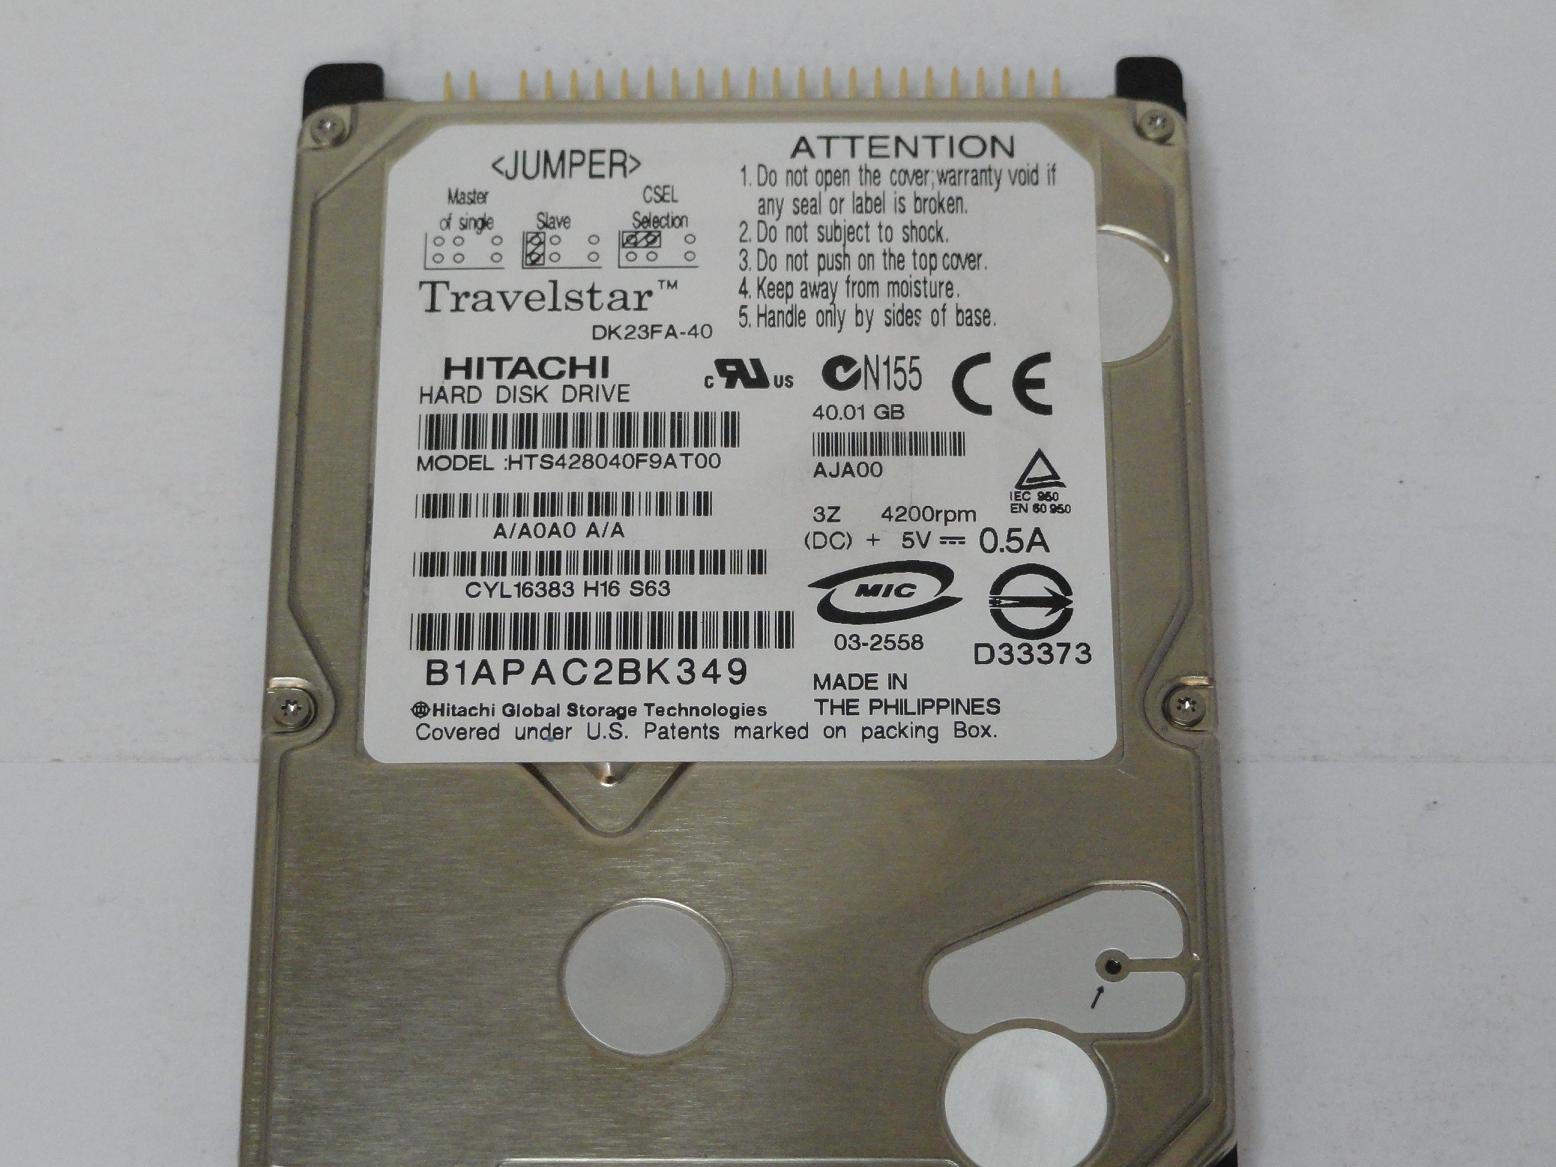 PR24612_DK23FA-40_Hitachi 20GB IDE 4200rpm 2.5in HDD - Image3